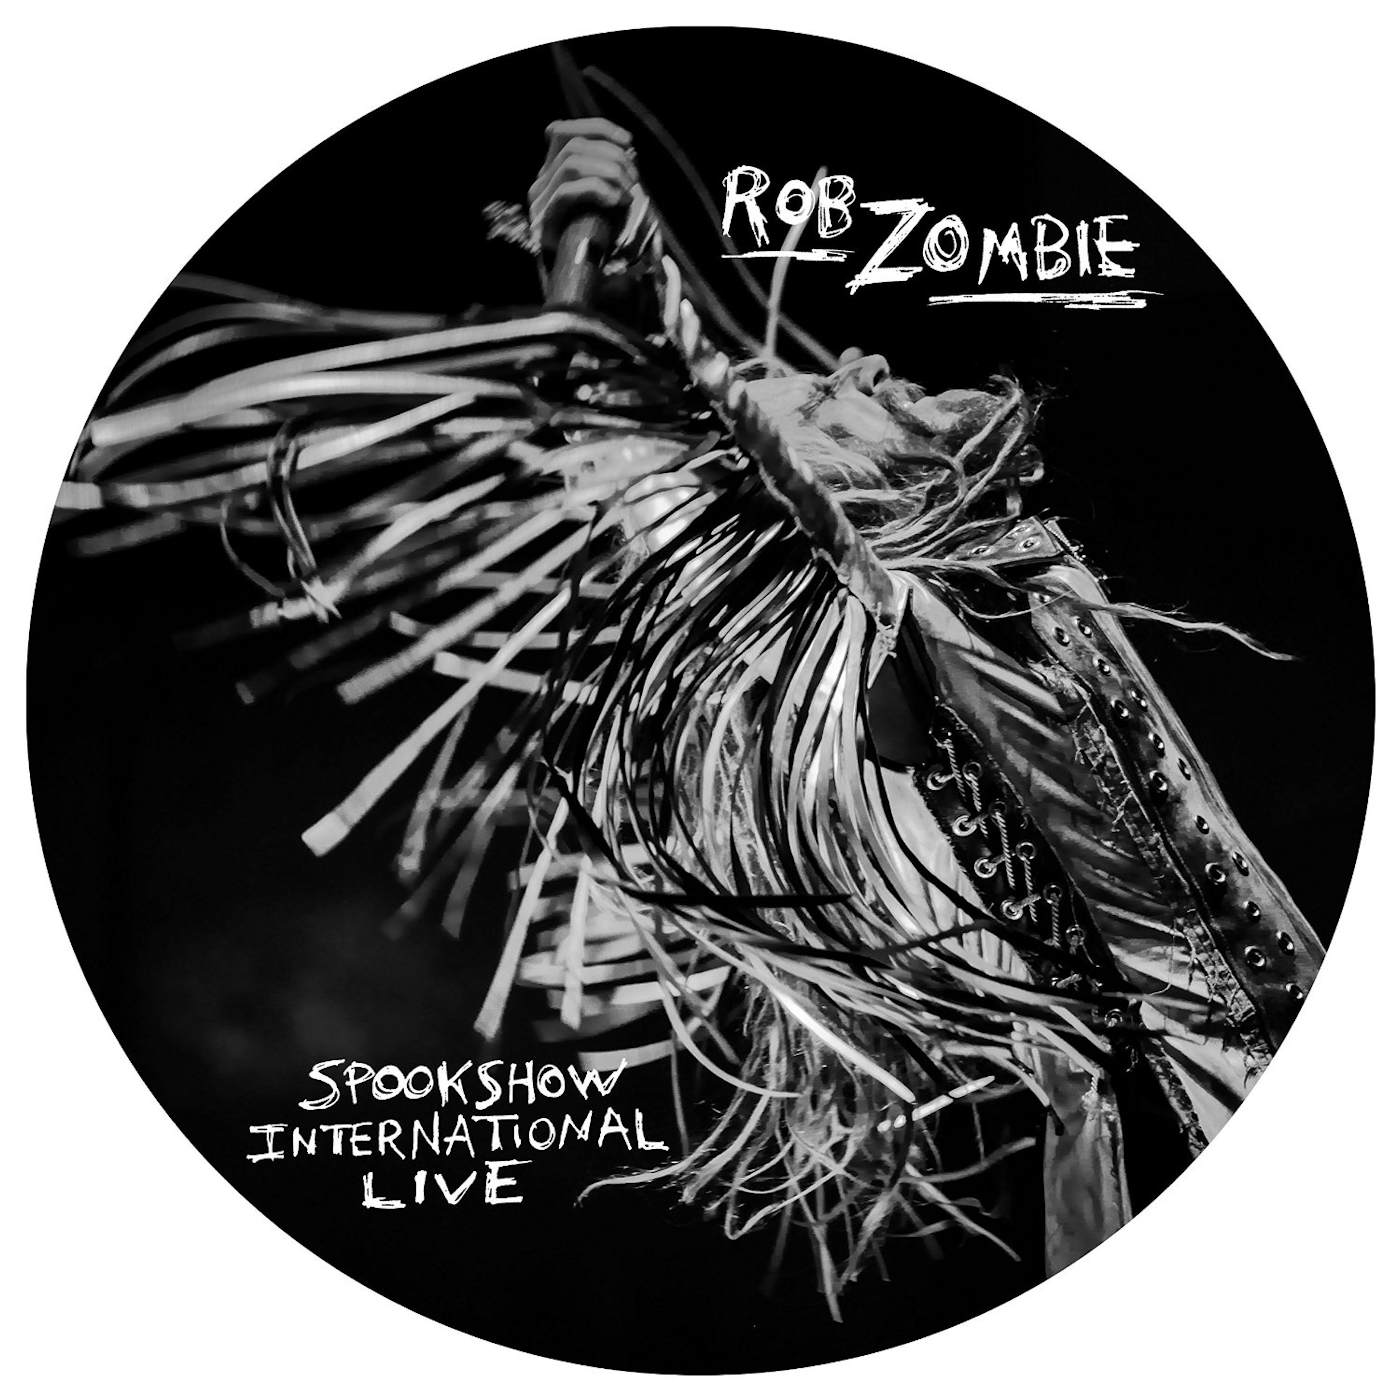 Rob Zombie Spookshow International Live Vinyl Record